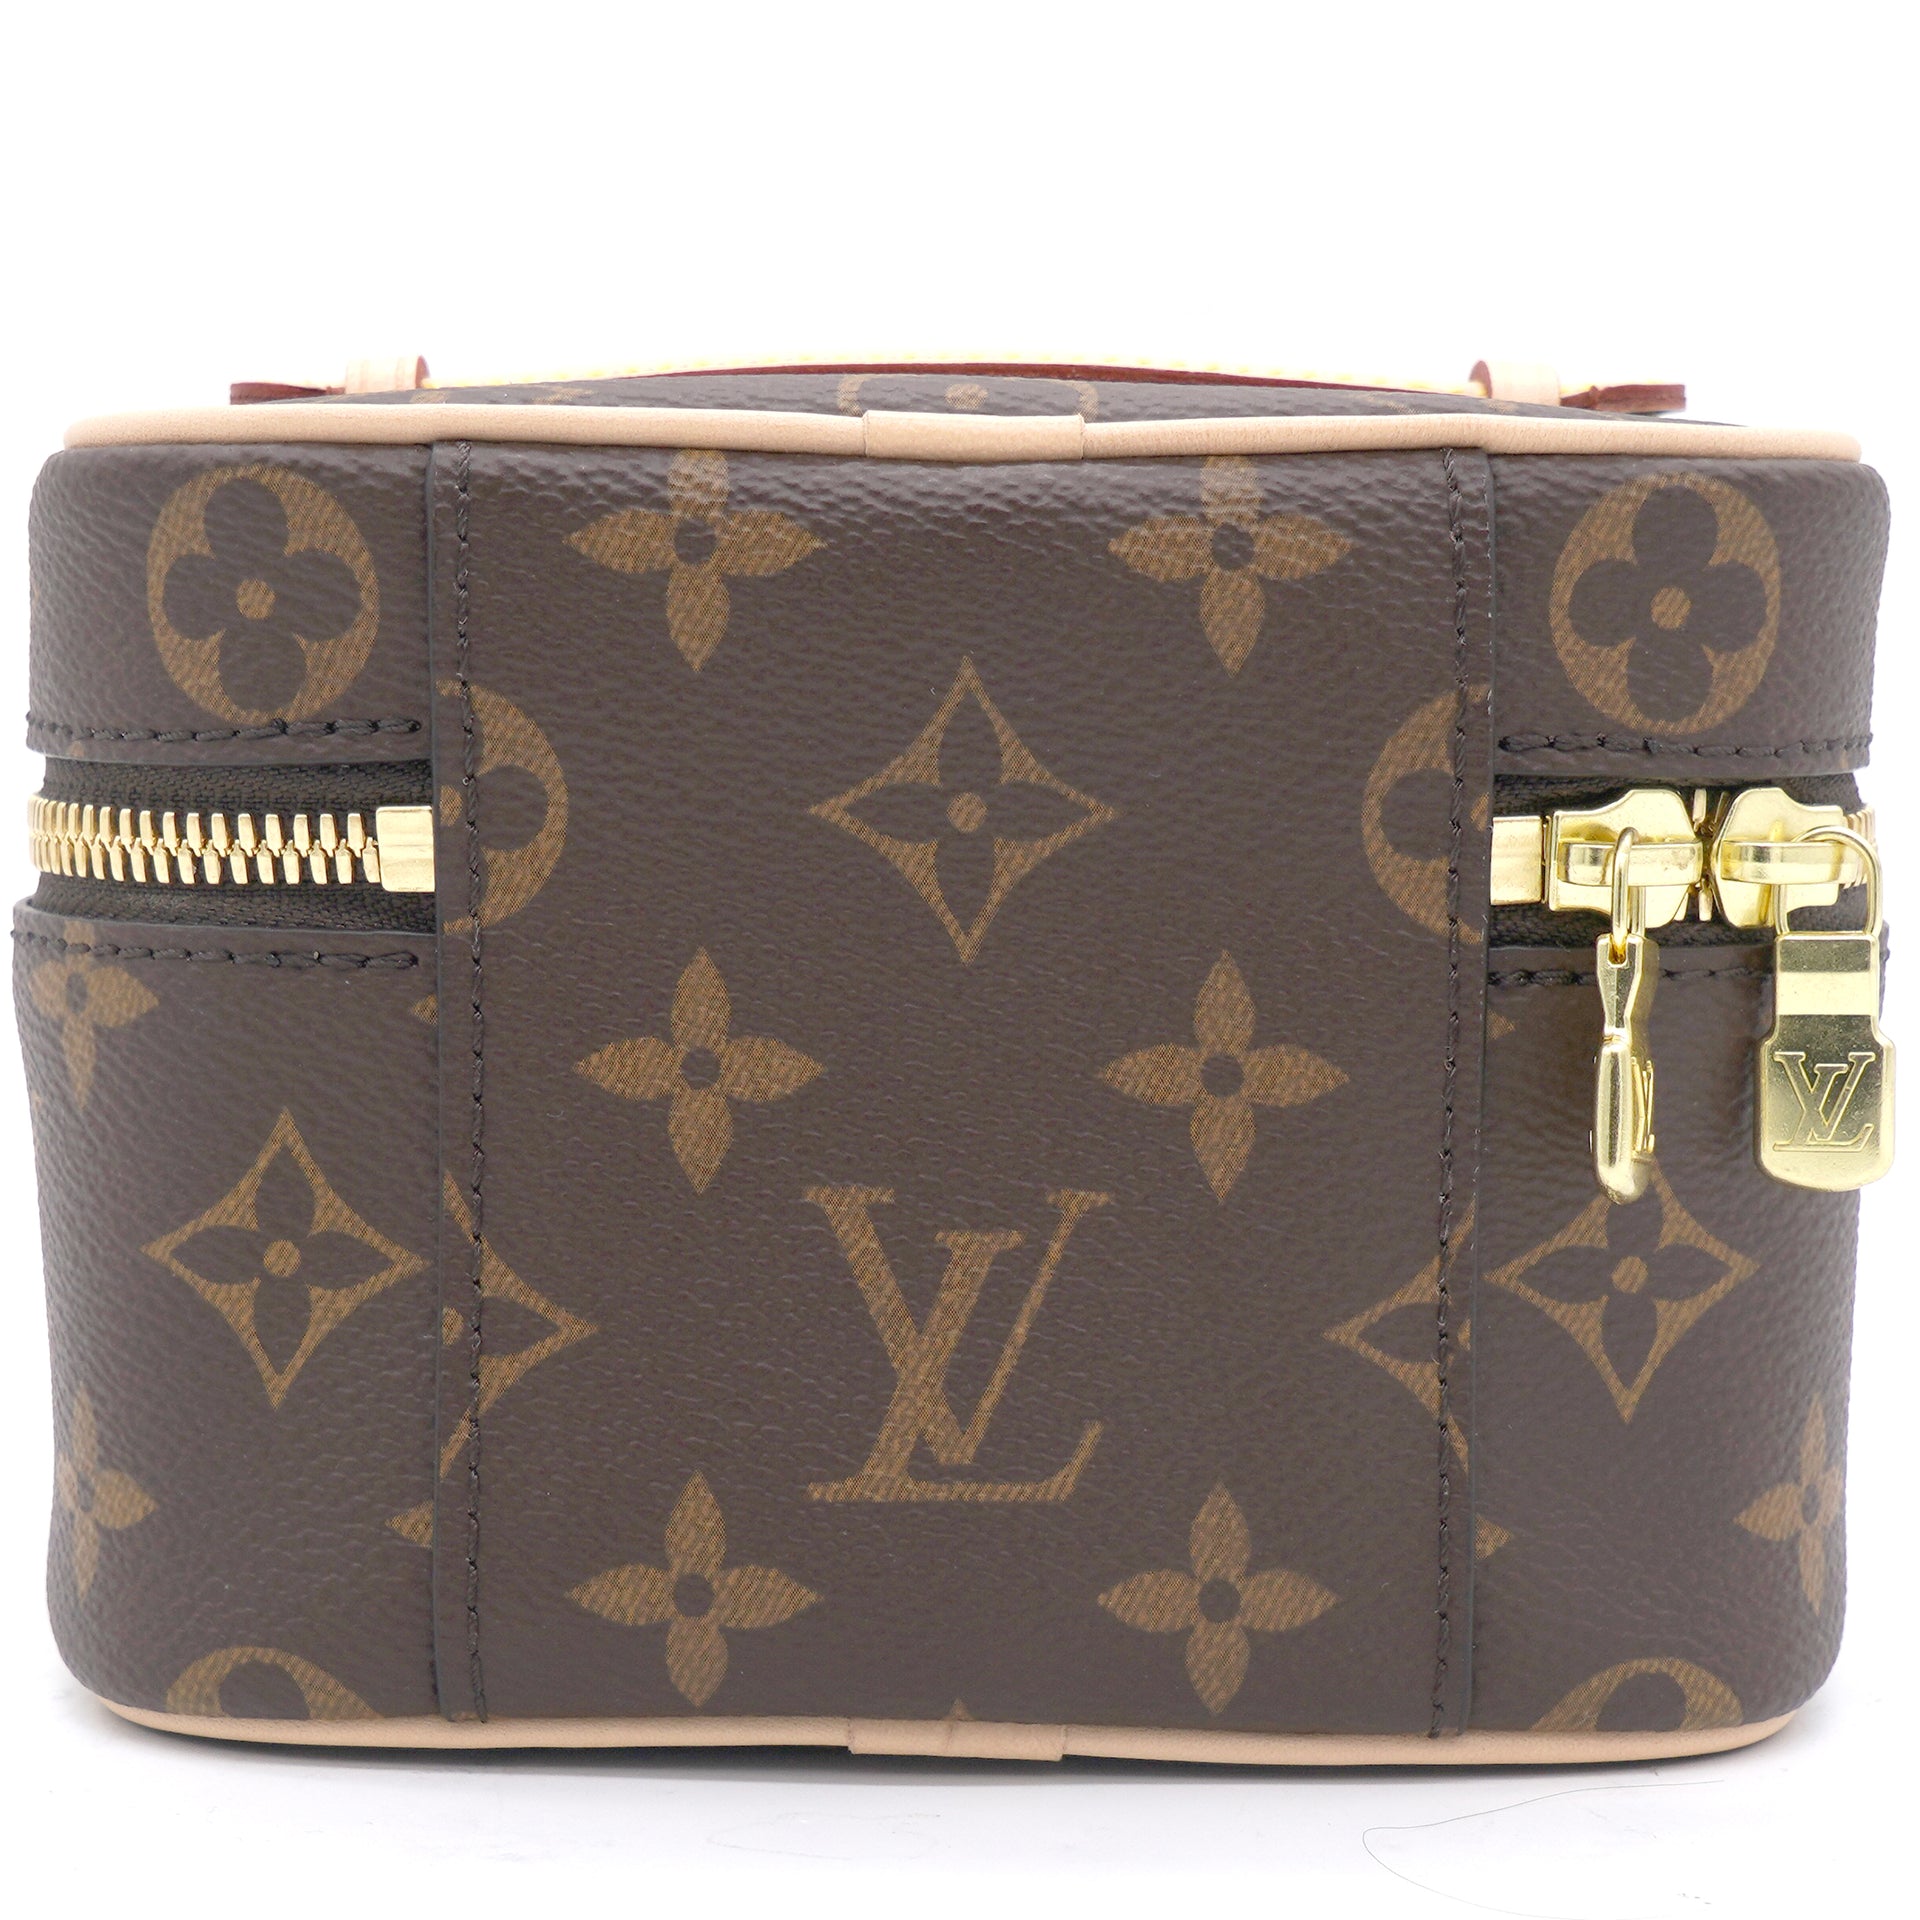 Túi Louis Vuitton Vanity Nano like Authentic  Shoptuihanghieucom